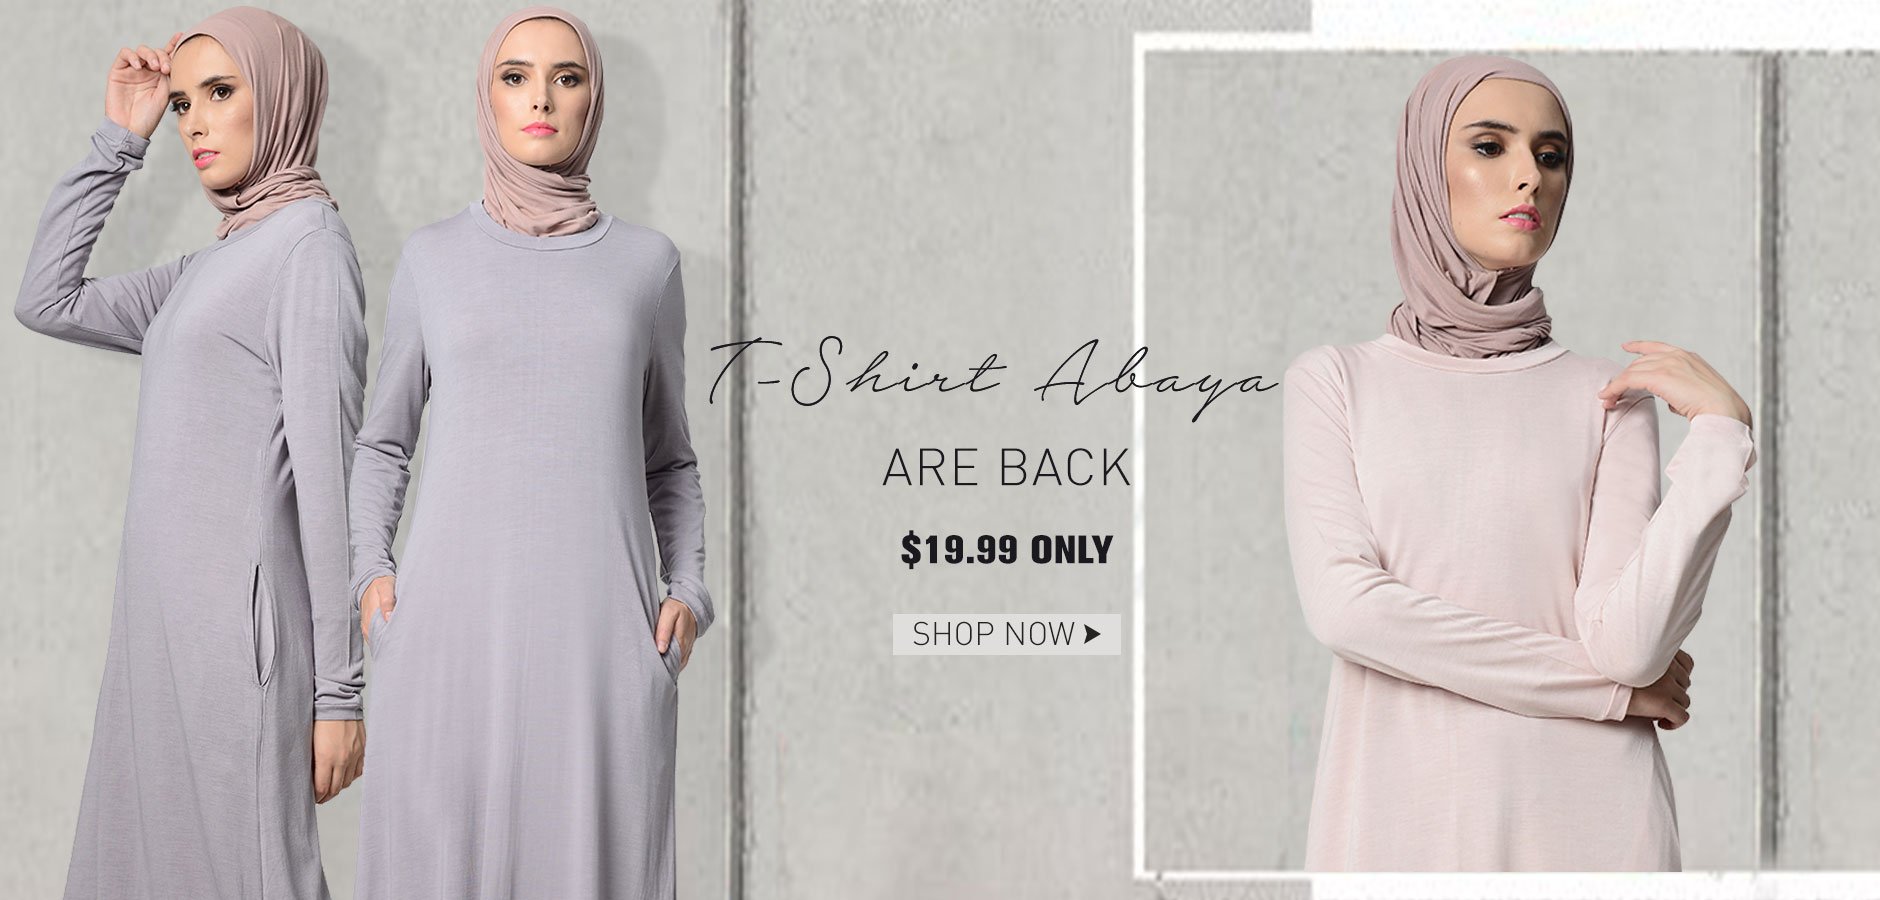 Abaya collections at Eastessence